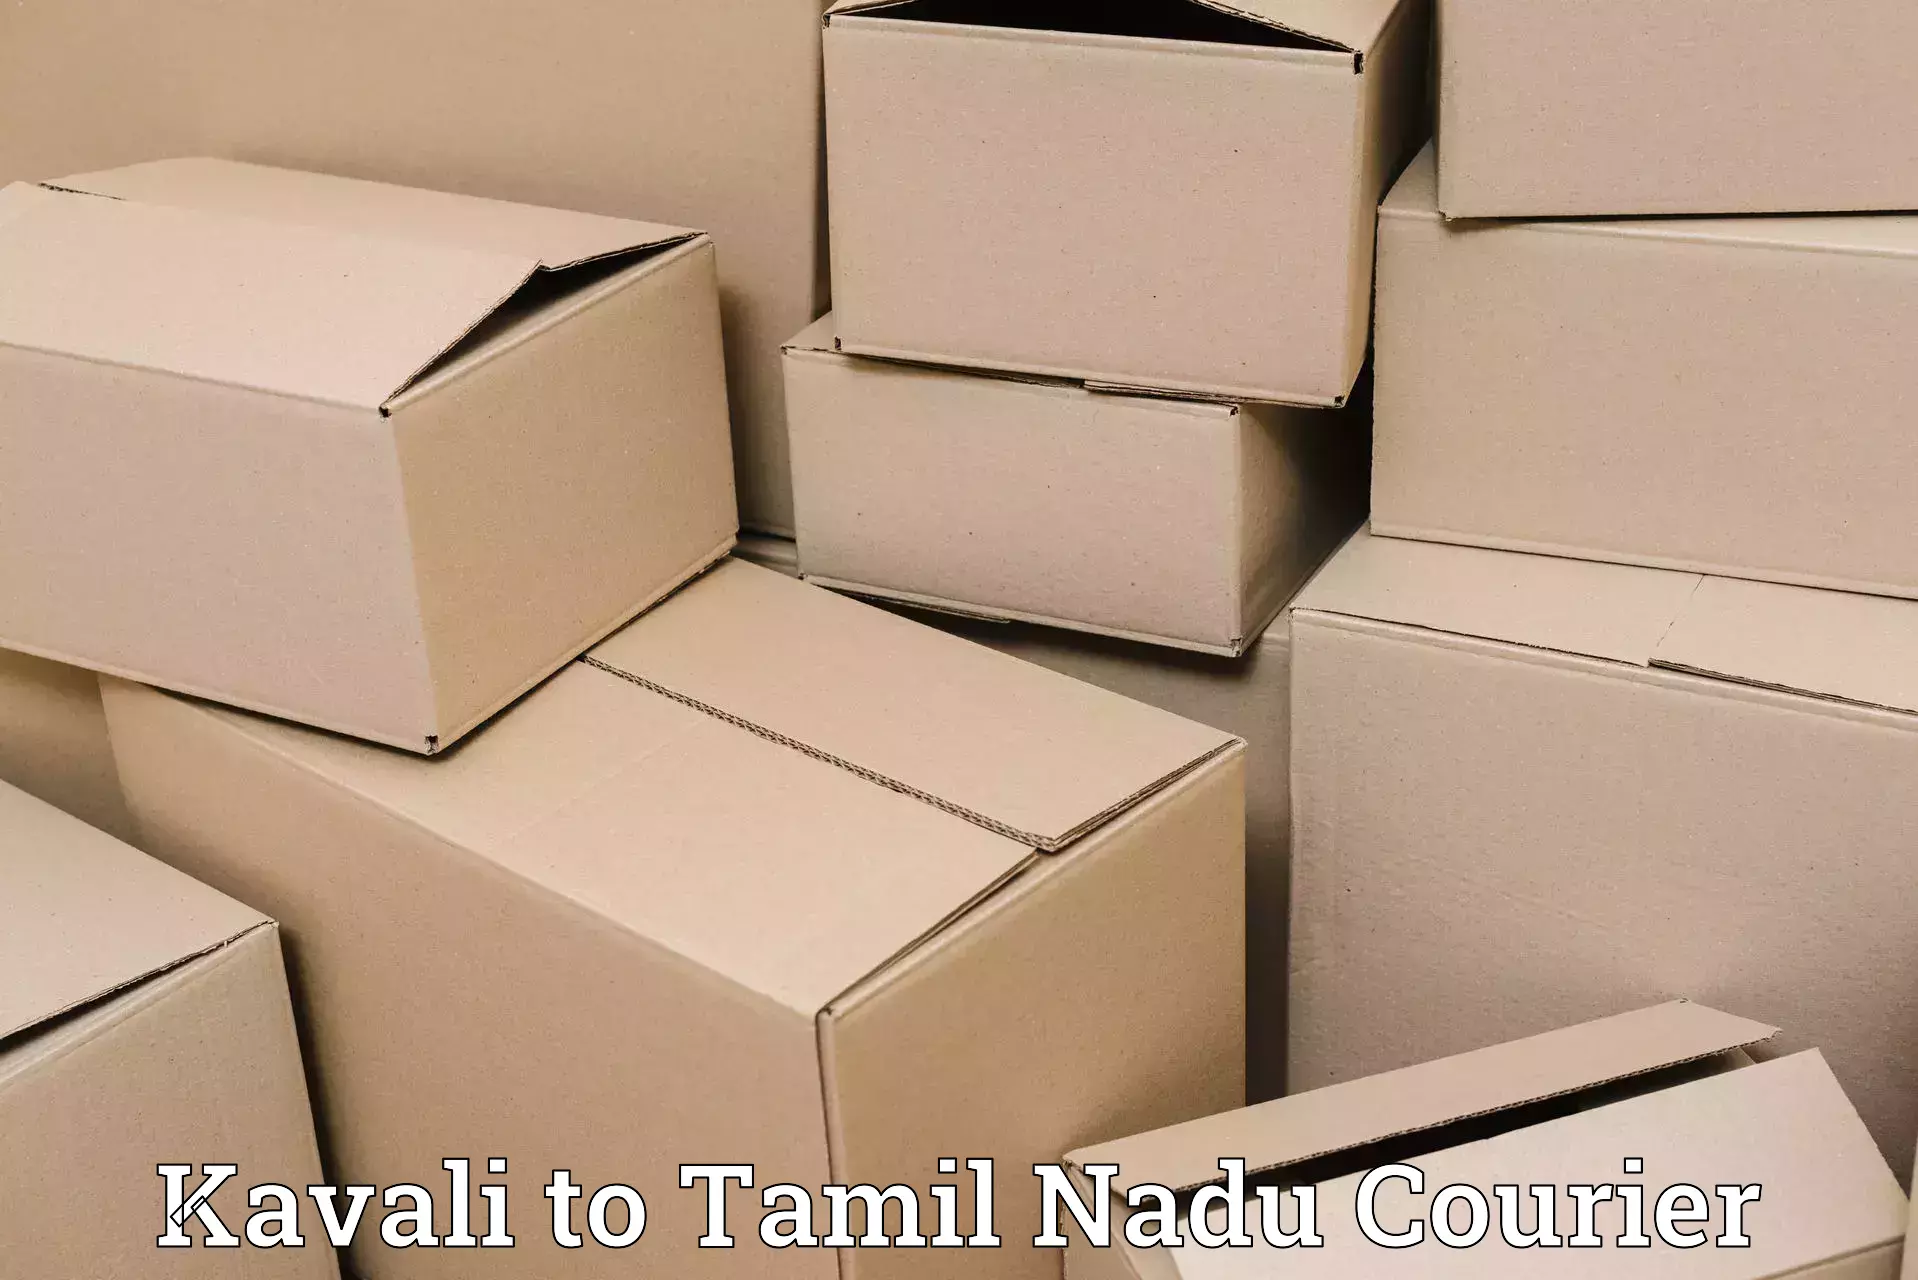 Courier service partnerships Kavali to Villupuram